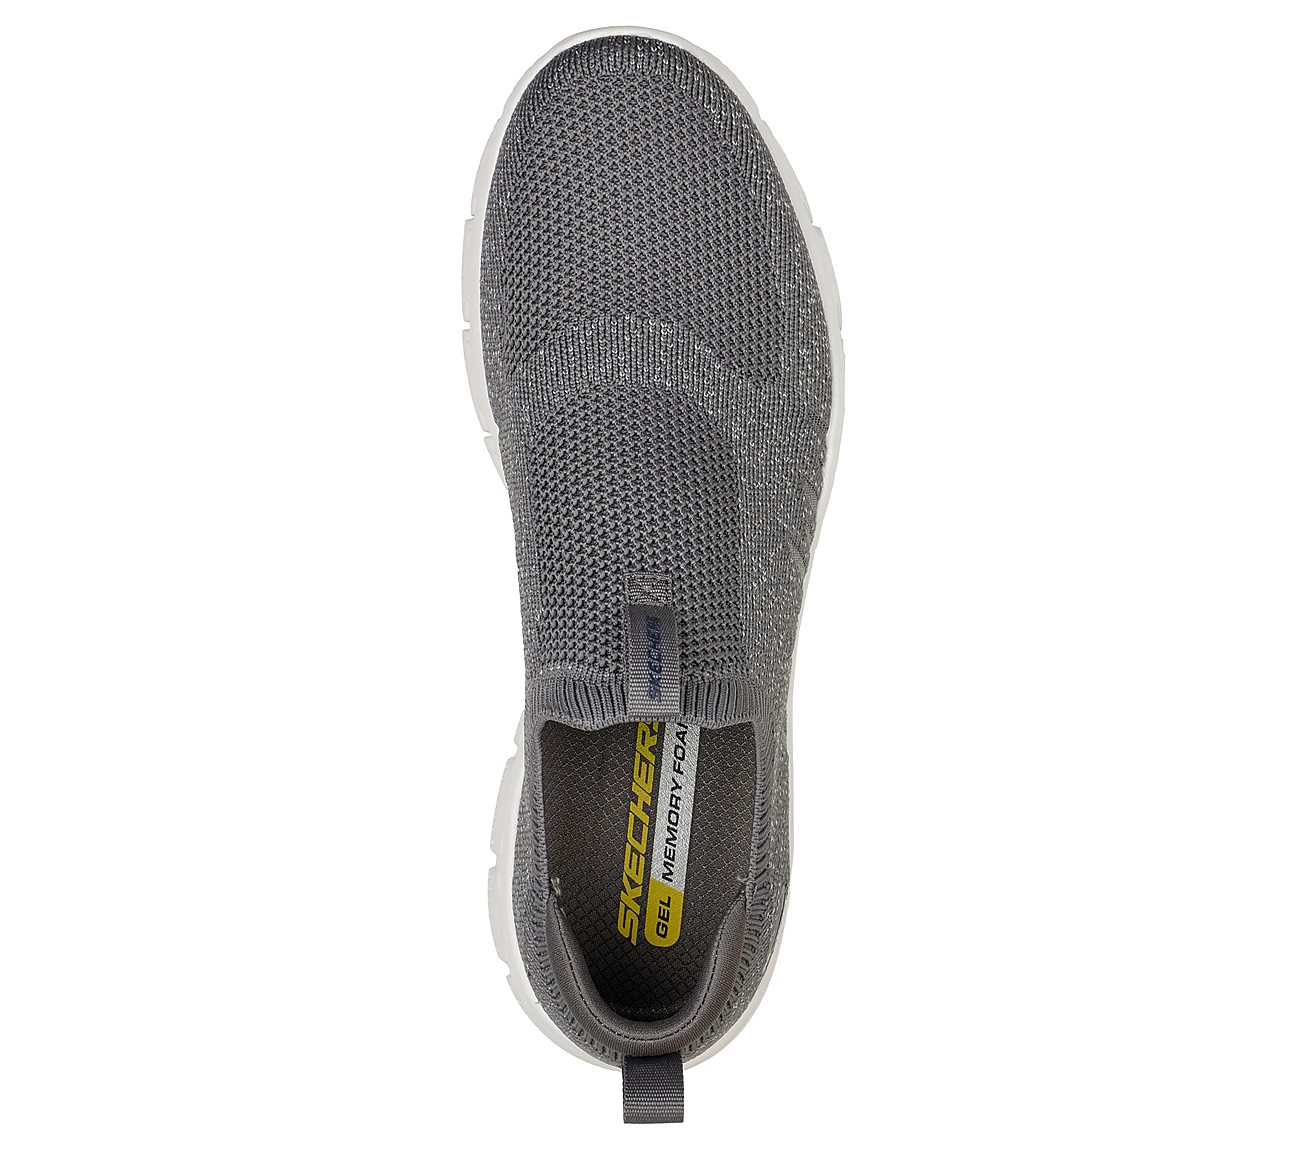 GLIDE-STEP FLEX, CCHARCOAL Footwear Top View